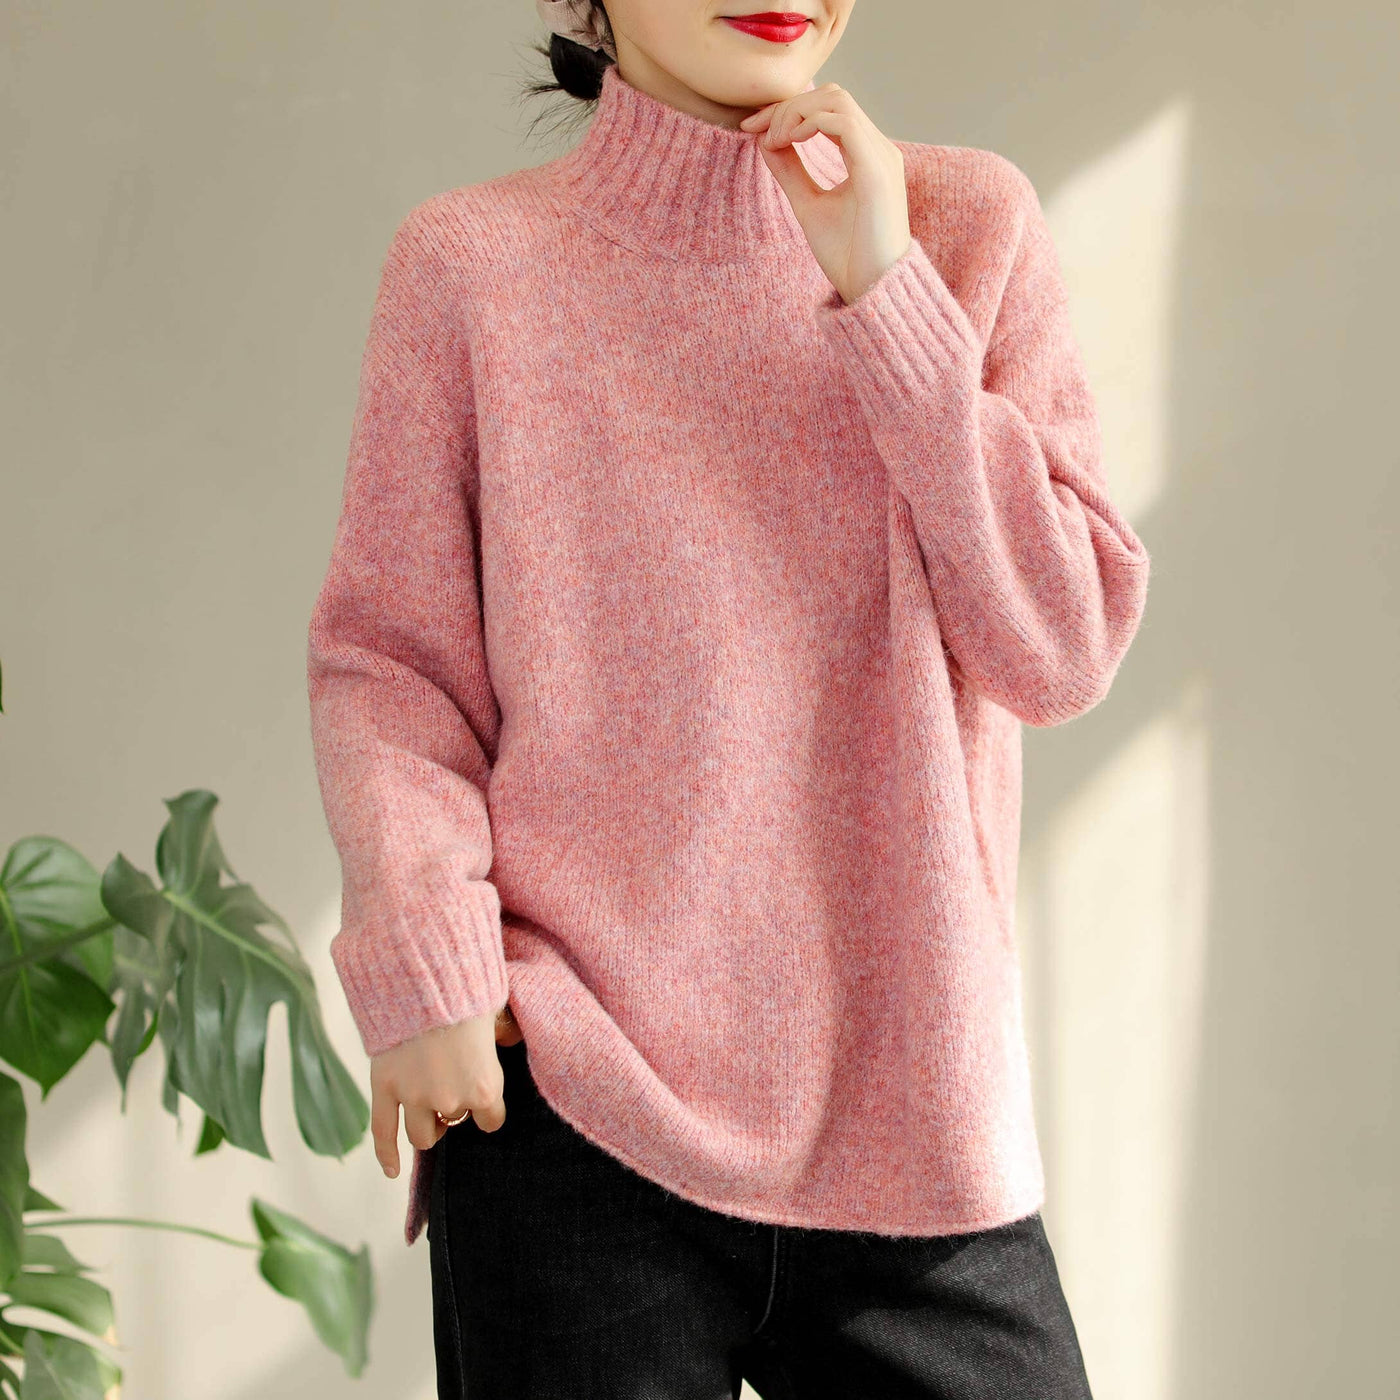 Women Autumn Winter Cotton Knitted Elastic Sweater